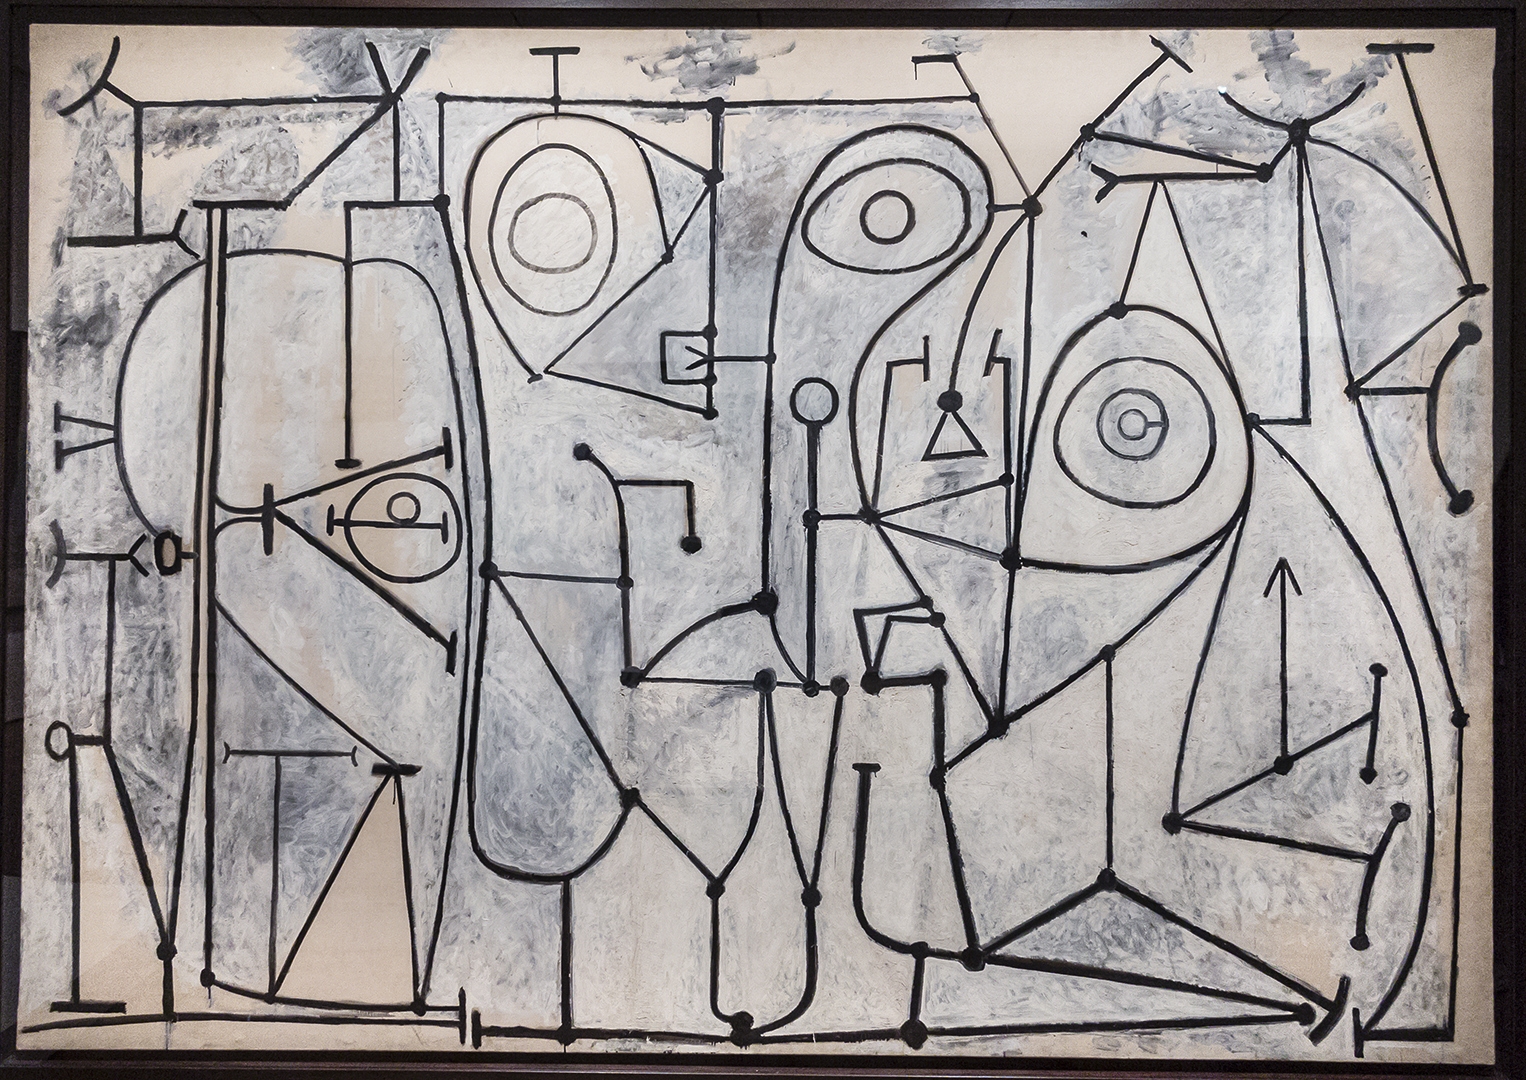 Pablo Picasso, 1881-1973, The Kitchen (1948).